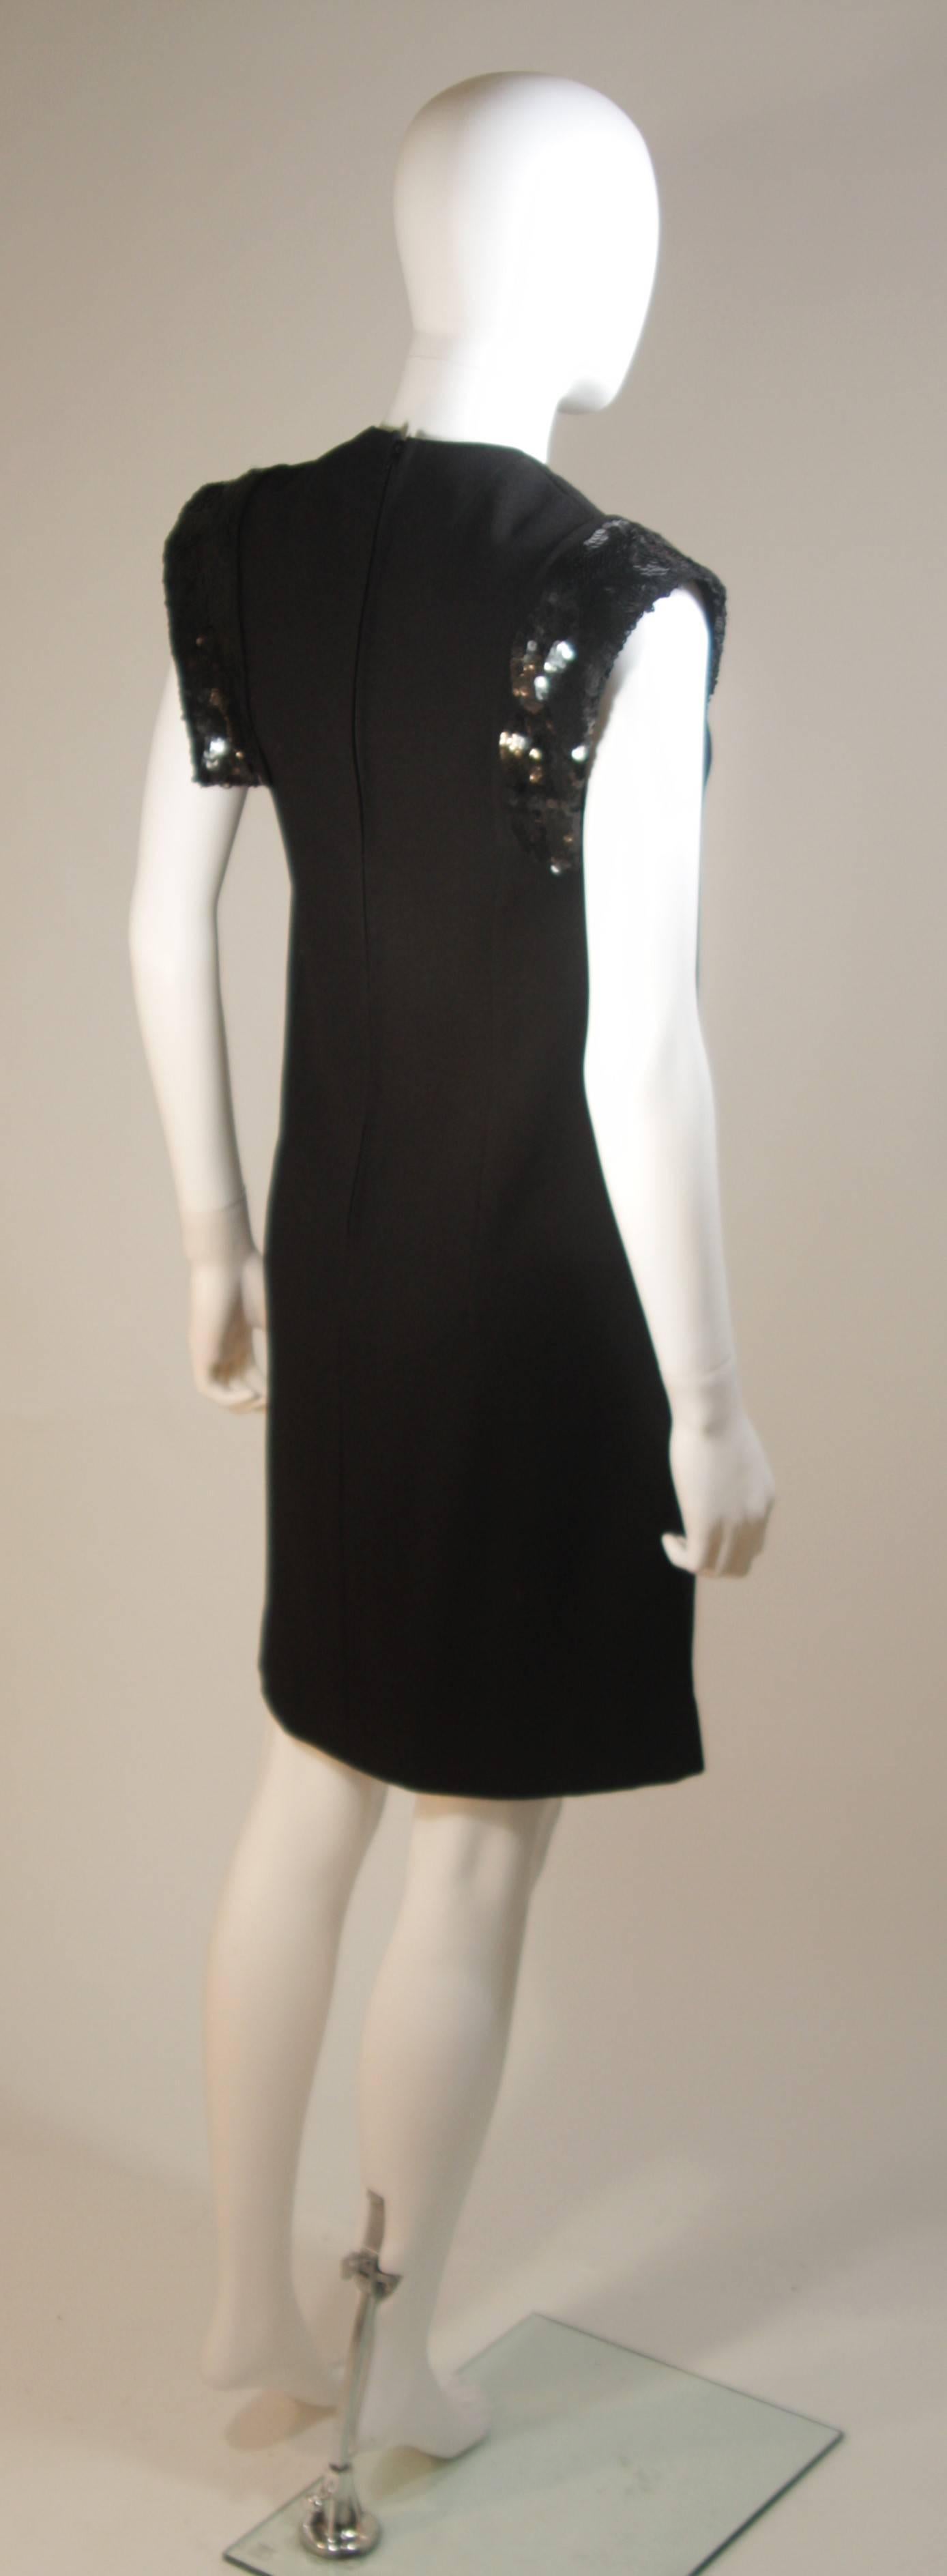 CARVEN COUTURE PARIS 1960's Black Sequin Dress with Structured Shoulders Size 2 For Sale 2